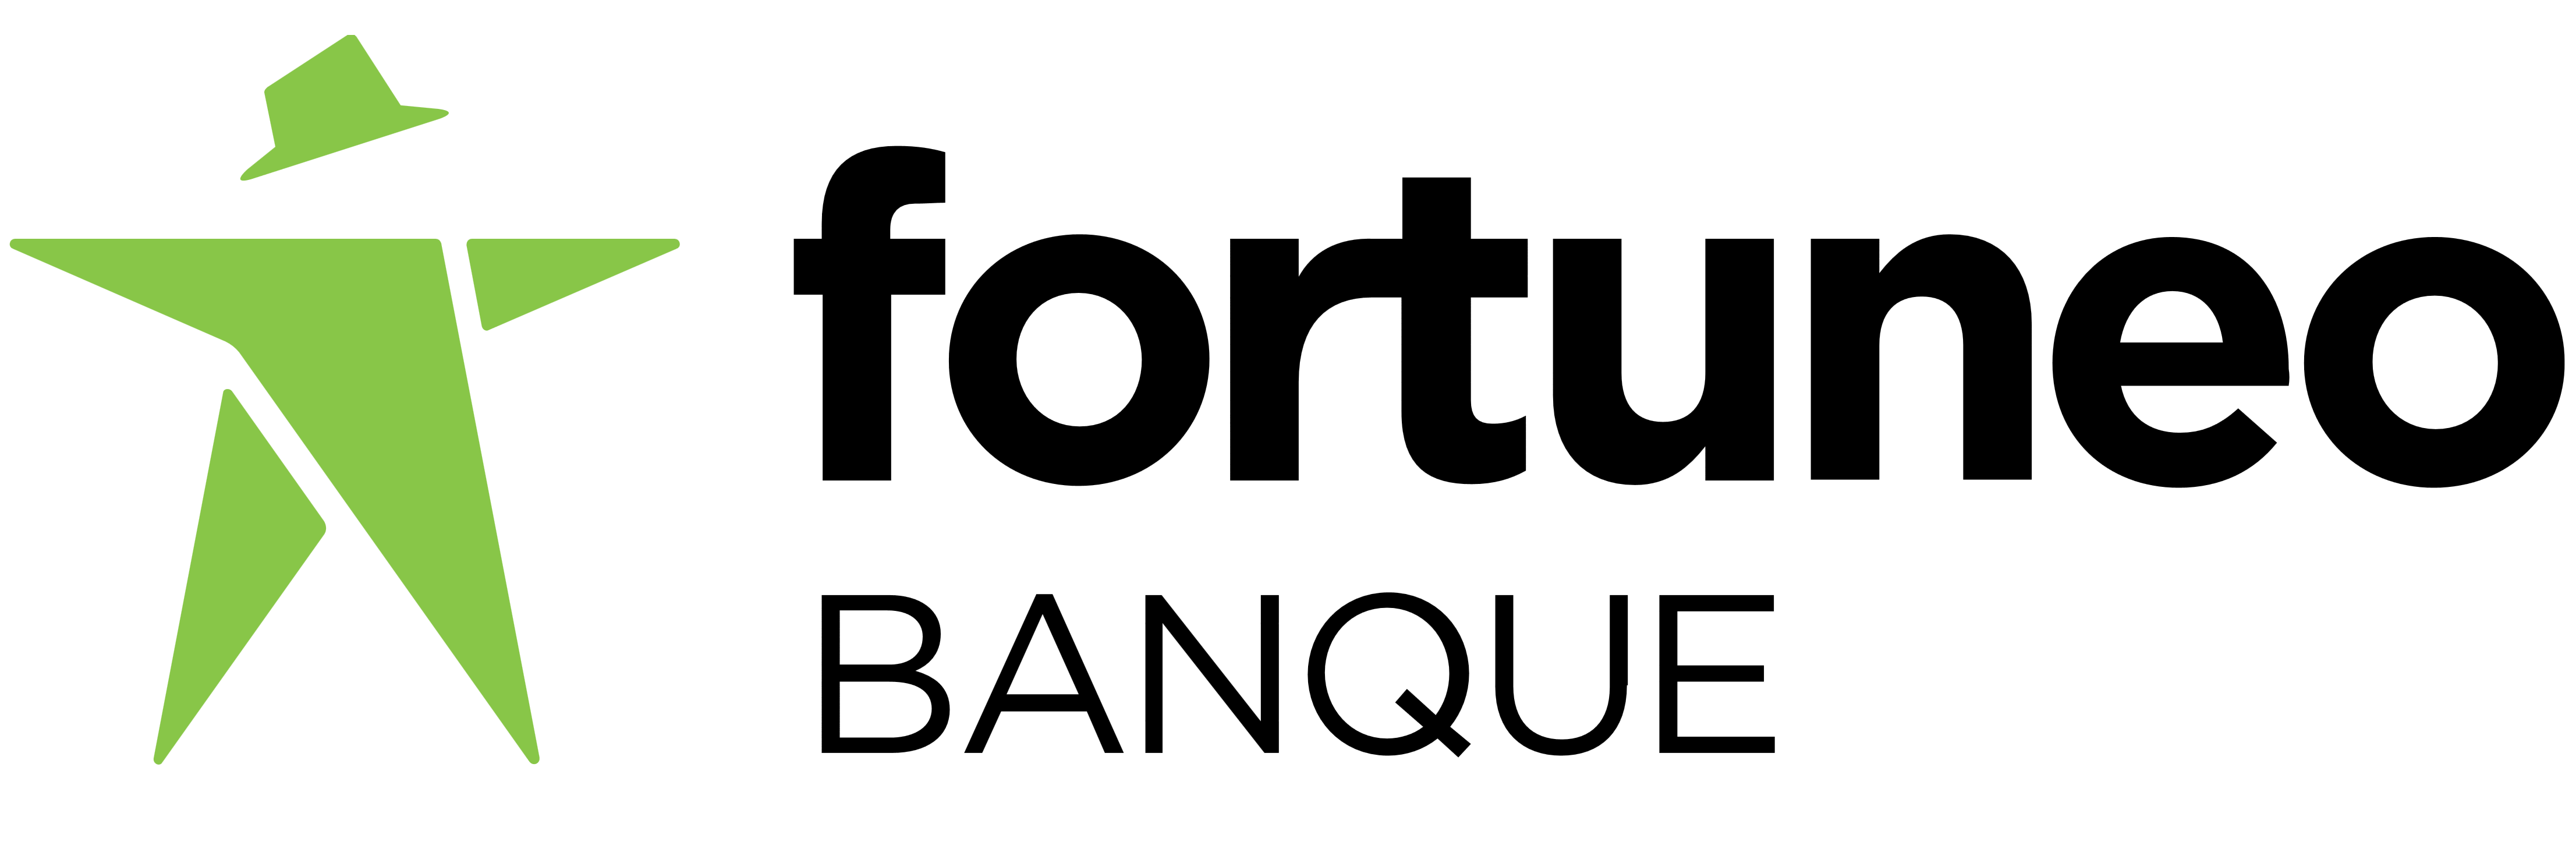 Fortuneo Banque logo, logotype